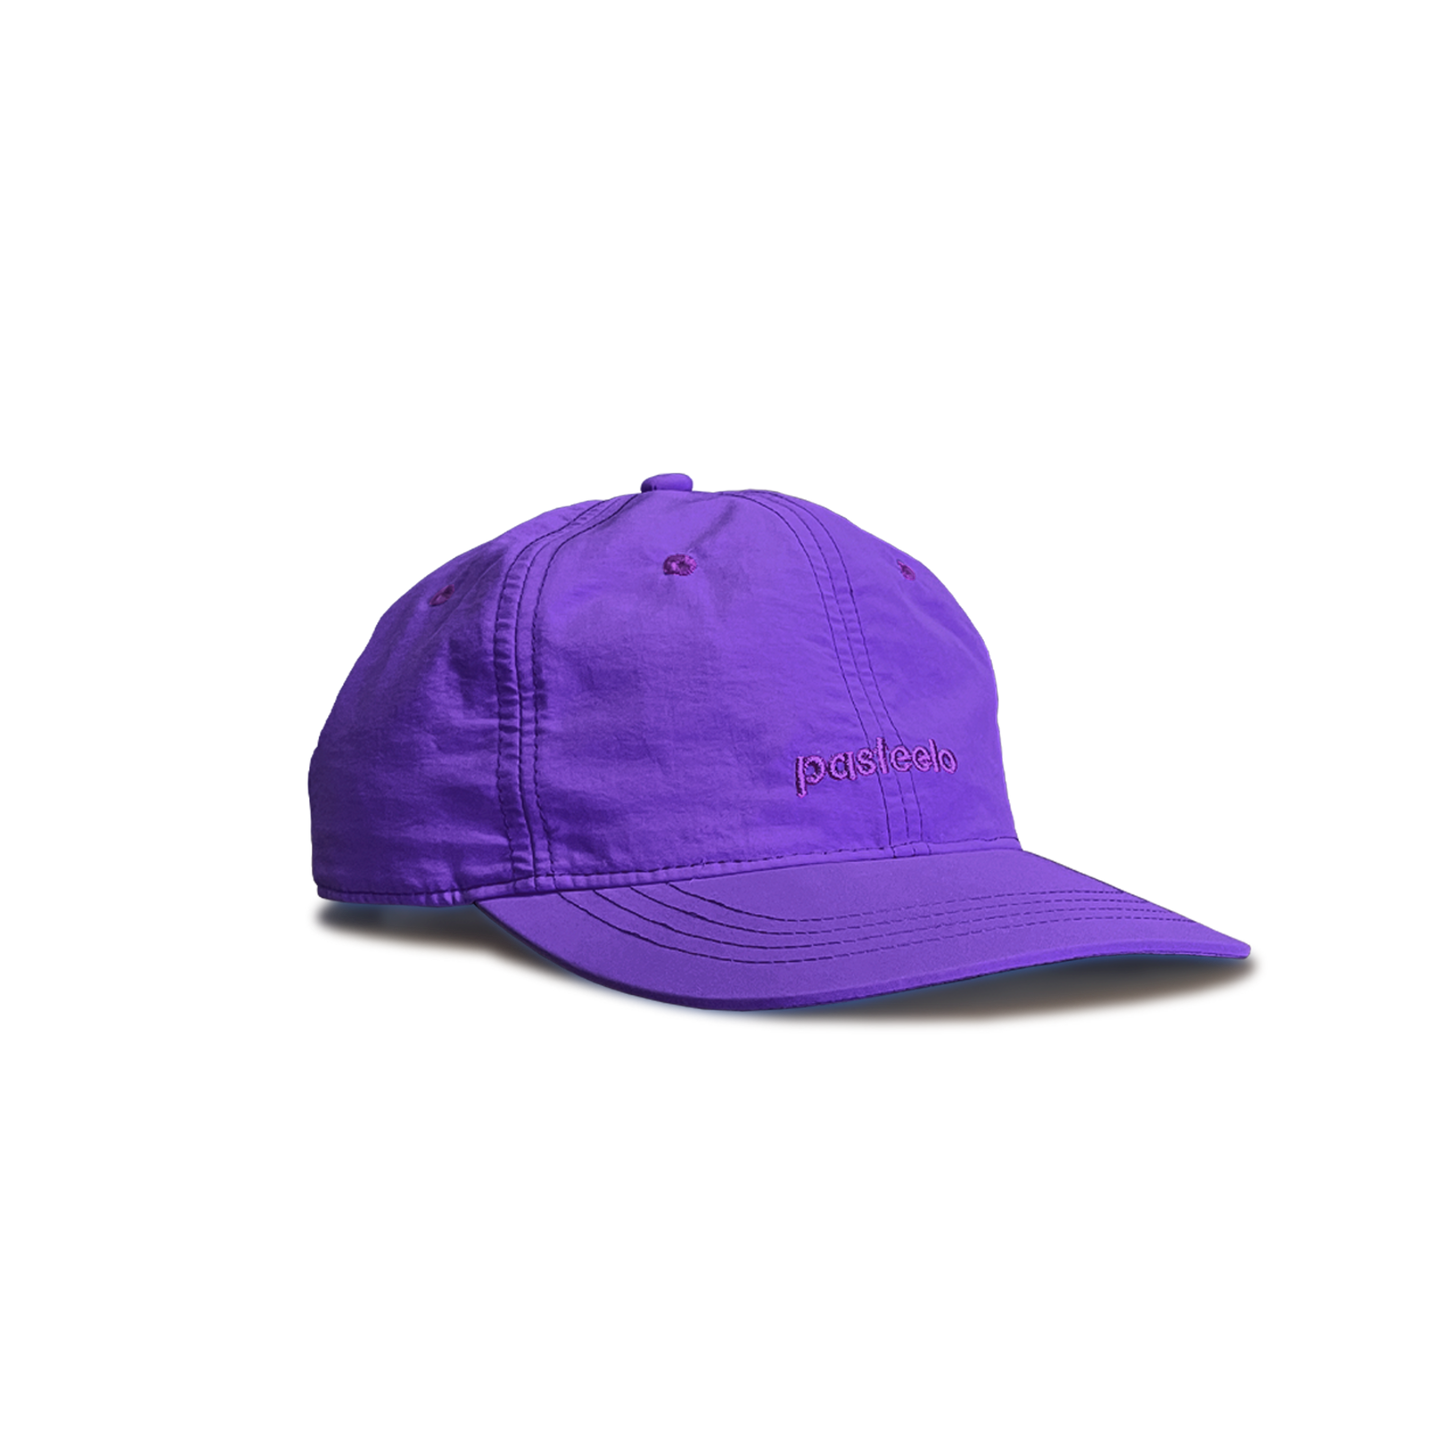 Pasteelo - Active Cap - Purple - Headz Up 